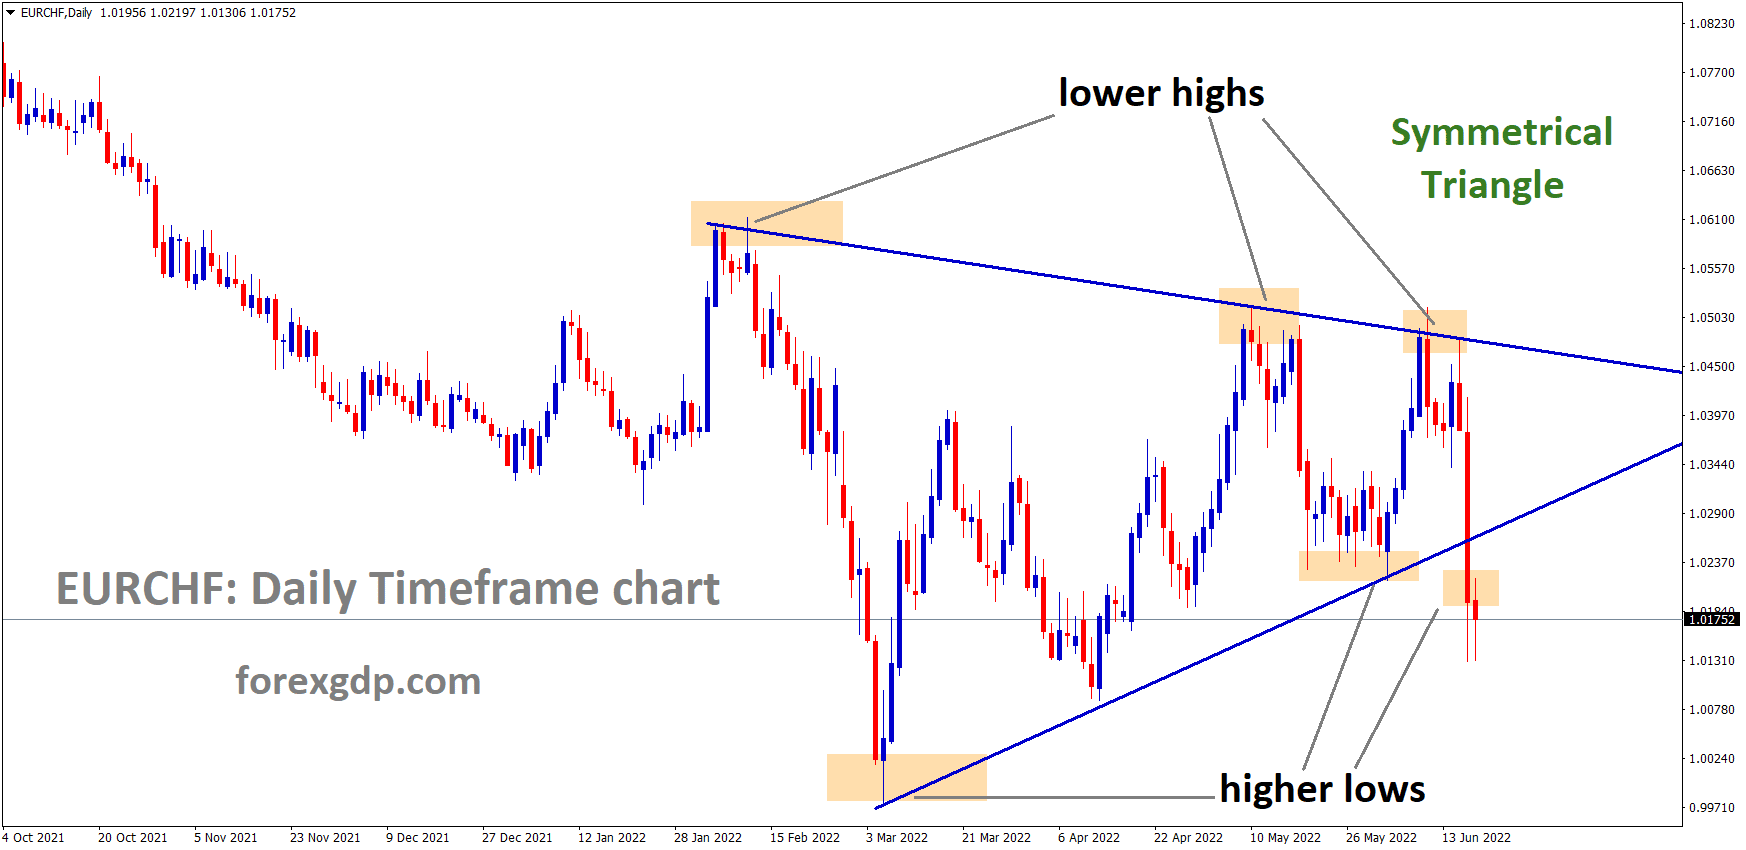 EURCHF has broken the Symmetrical Triangle pattern